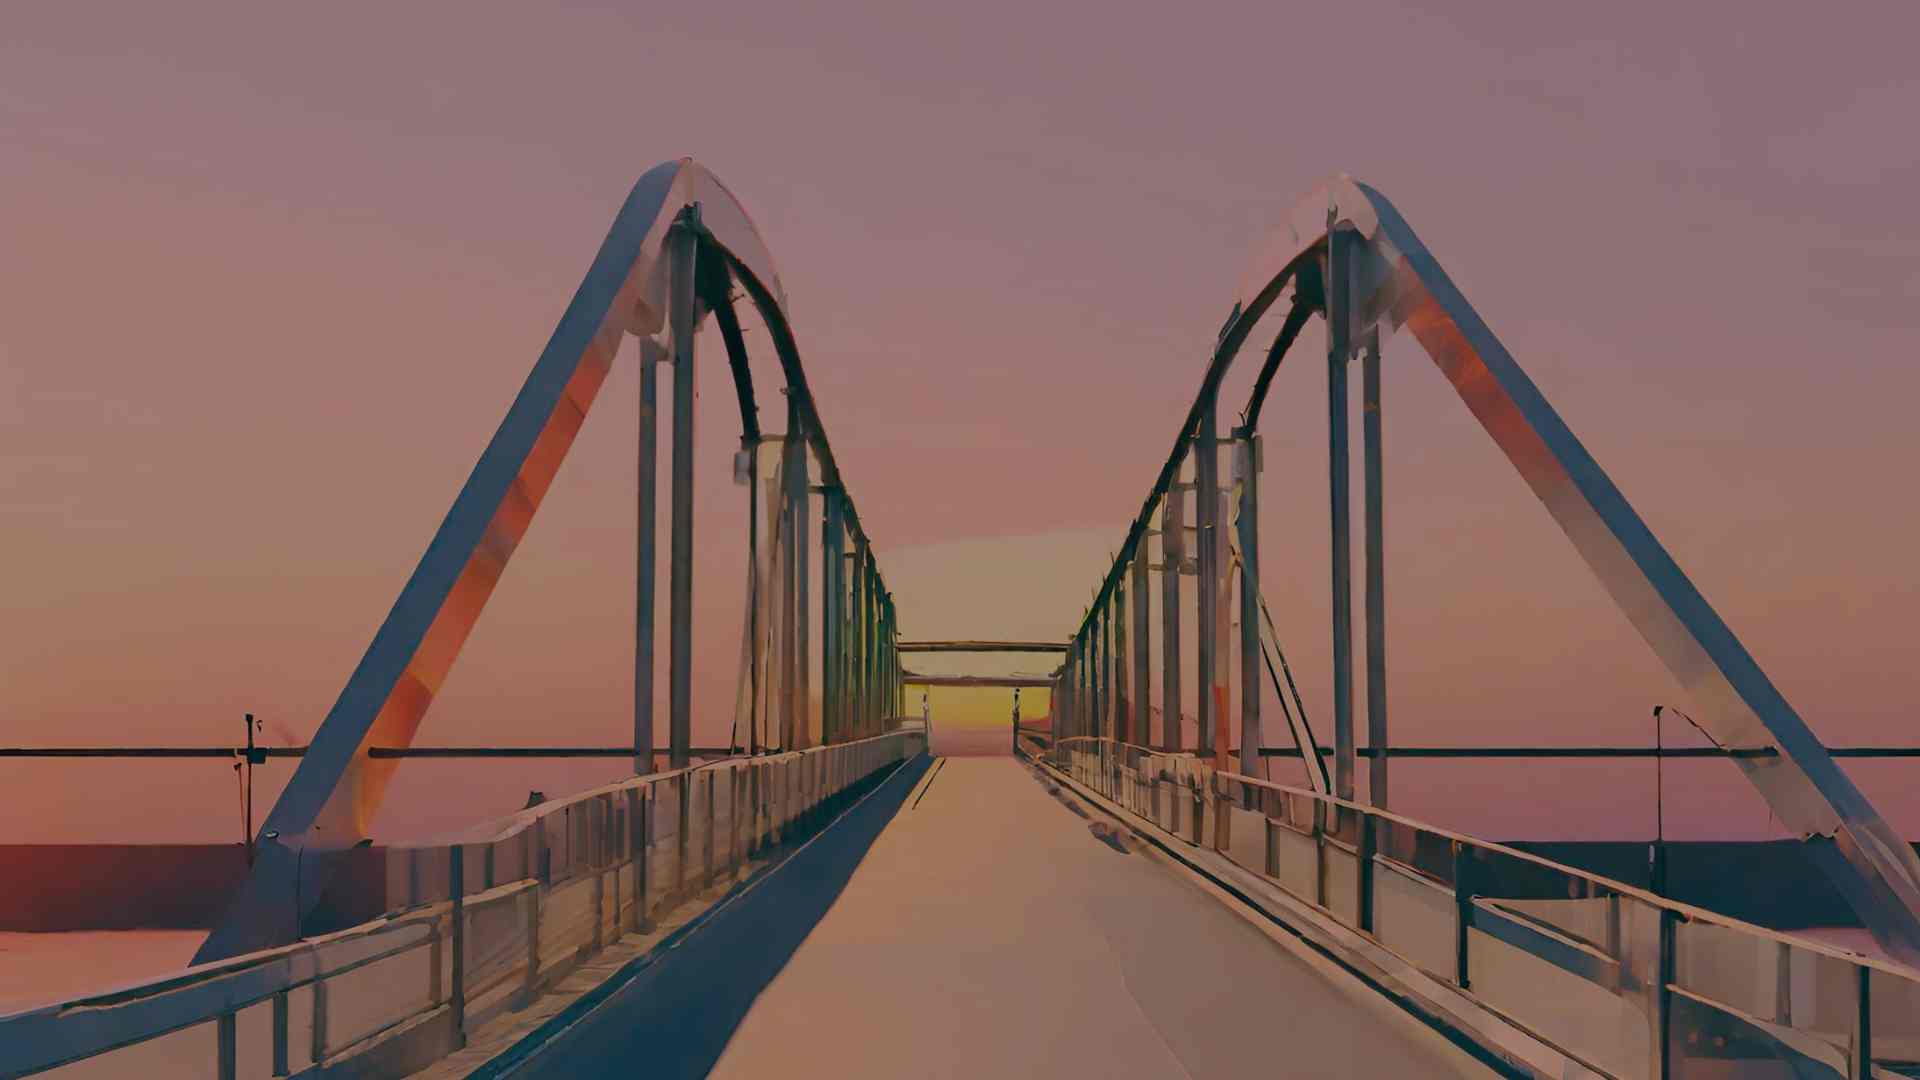 digital passenger boarding bridges at sunset